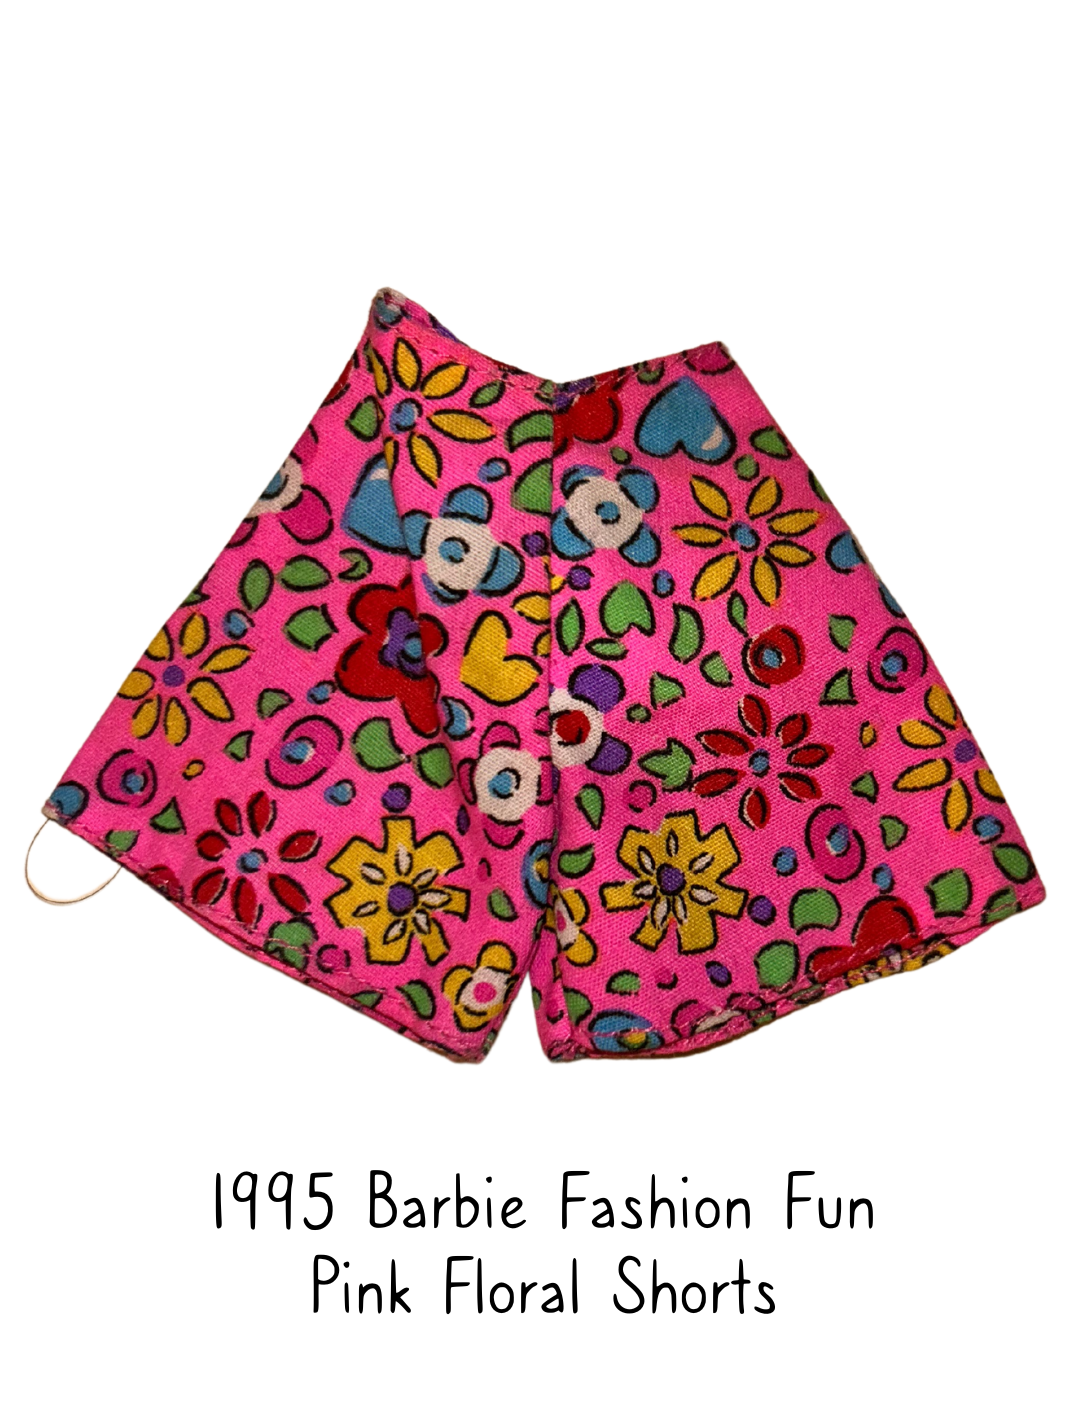 1995 Barbie Fashion Fun Pink Floral Shorts